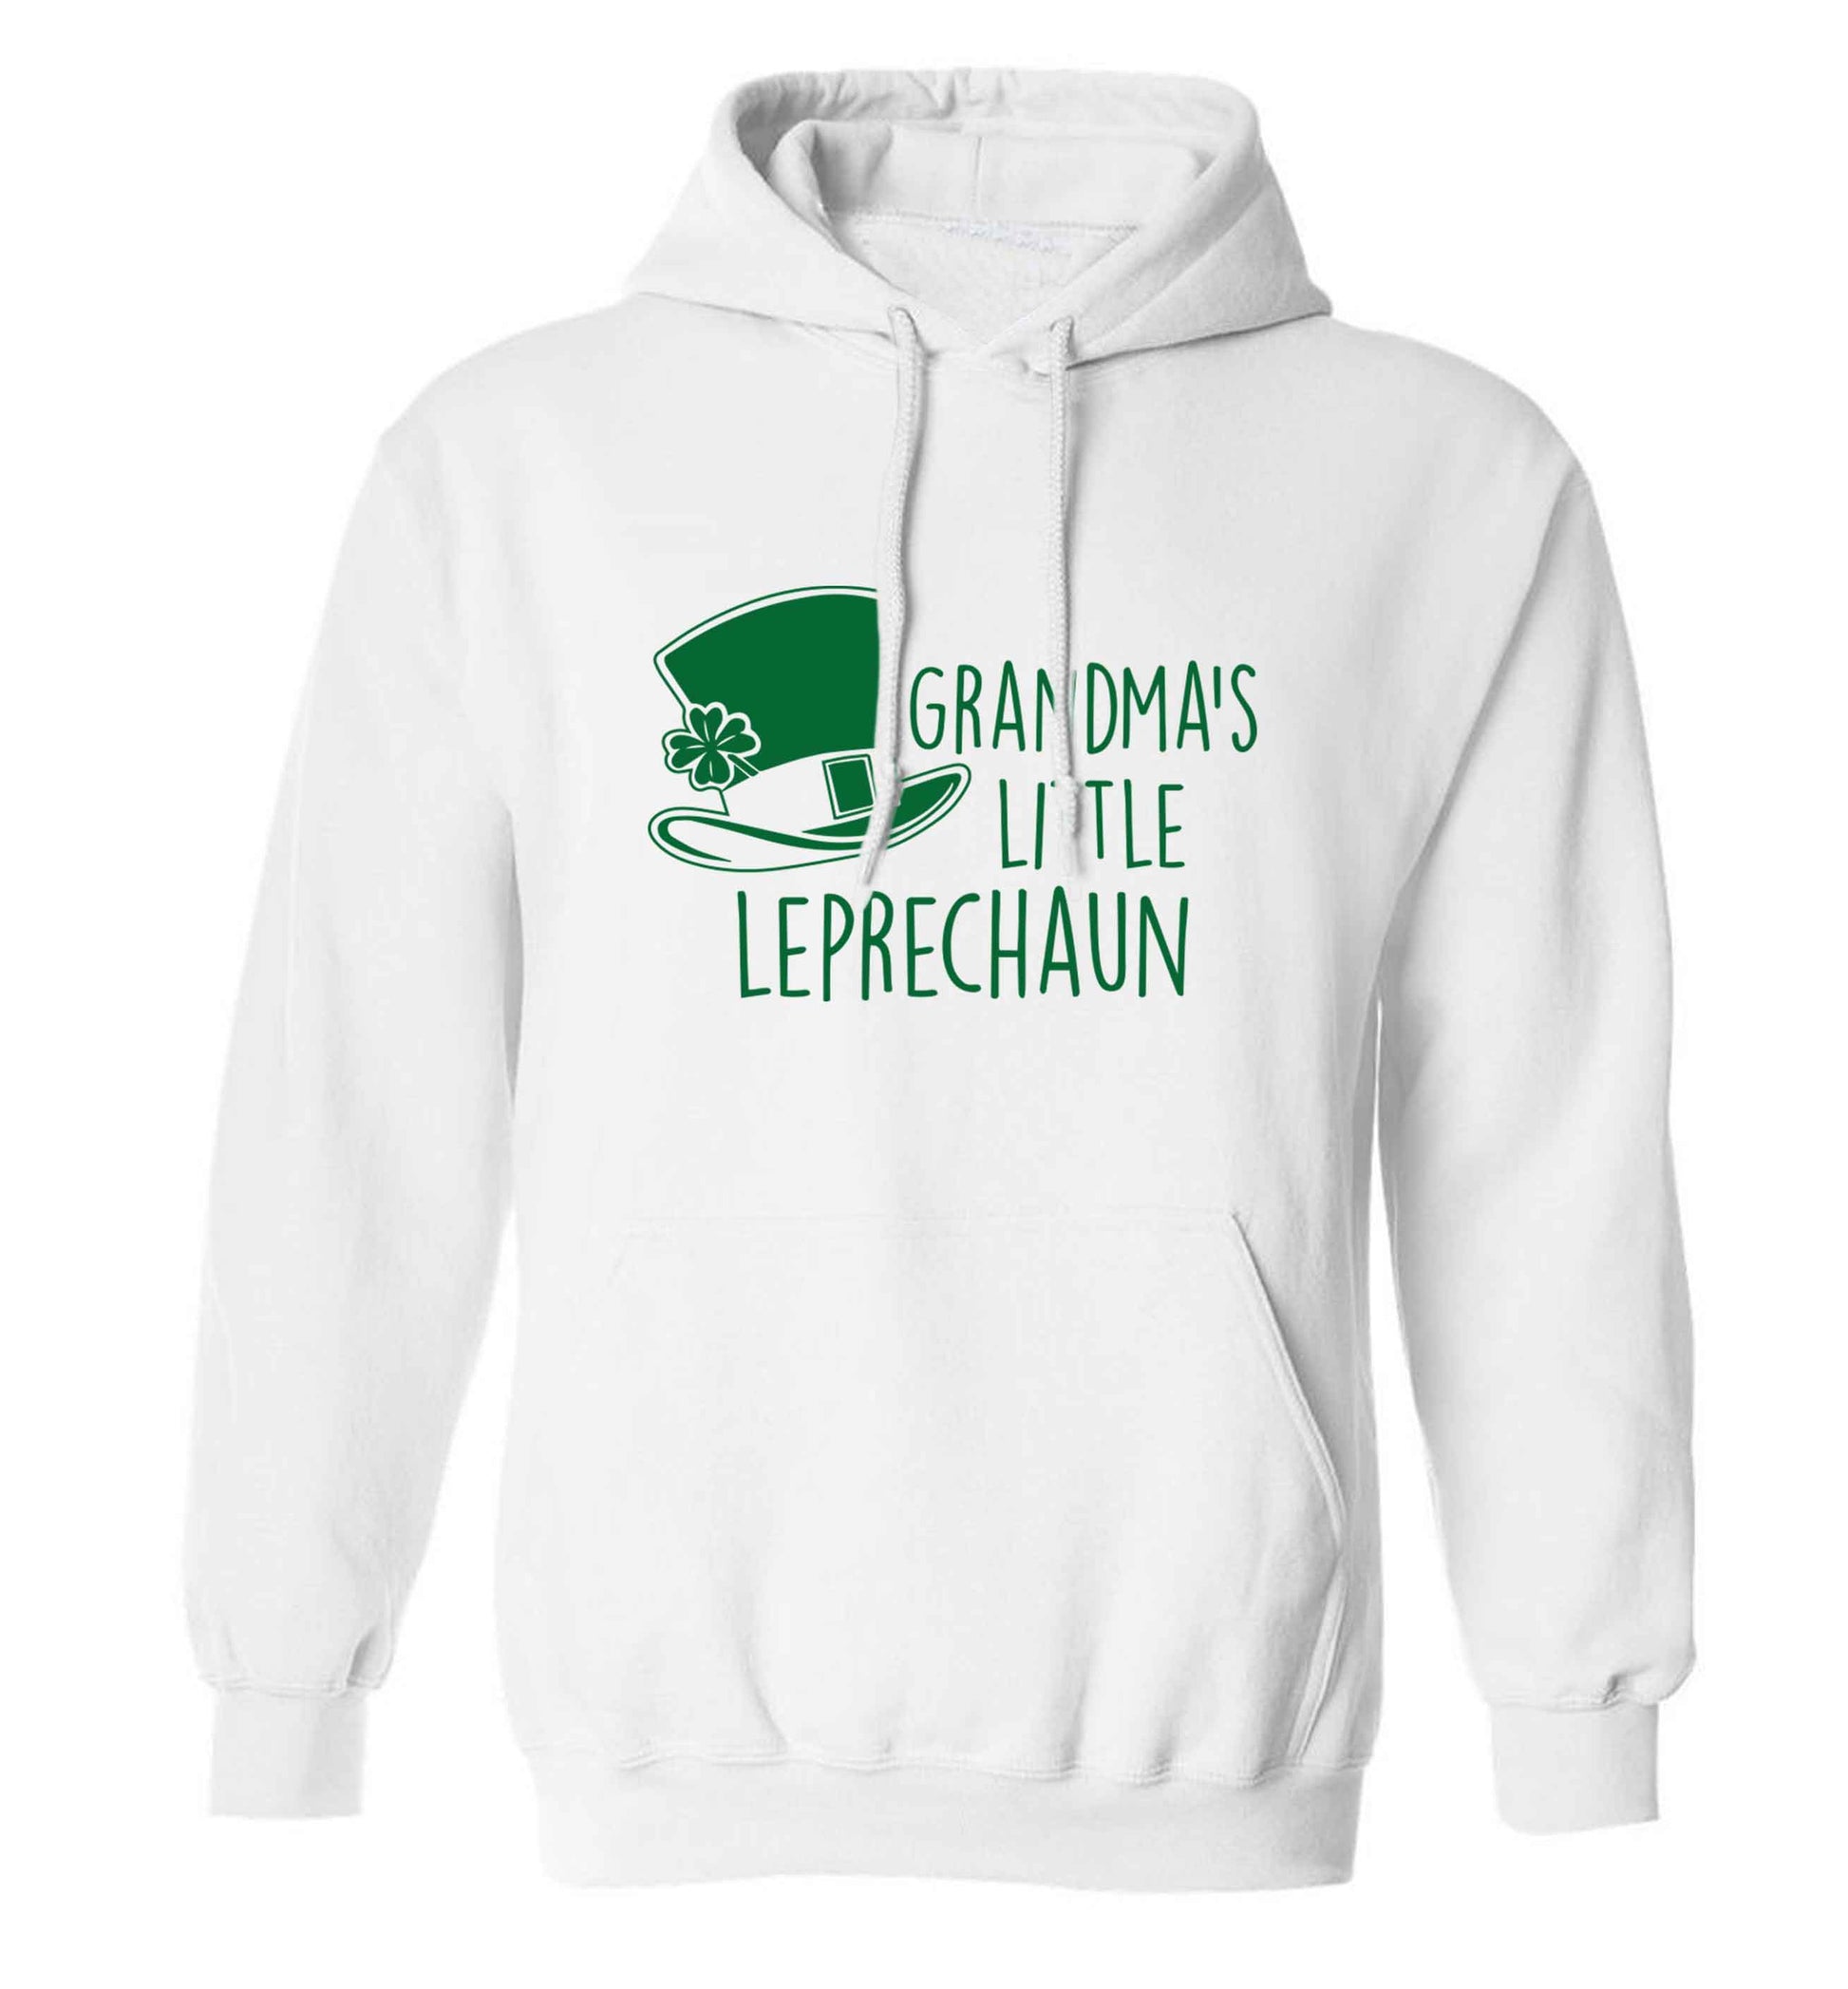 Grandma's little leprechaun adults unisex white hoodie 2XL